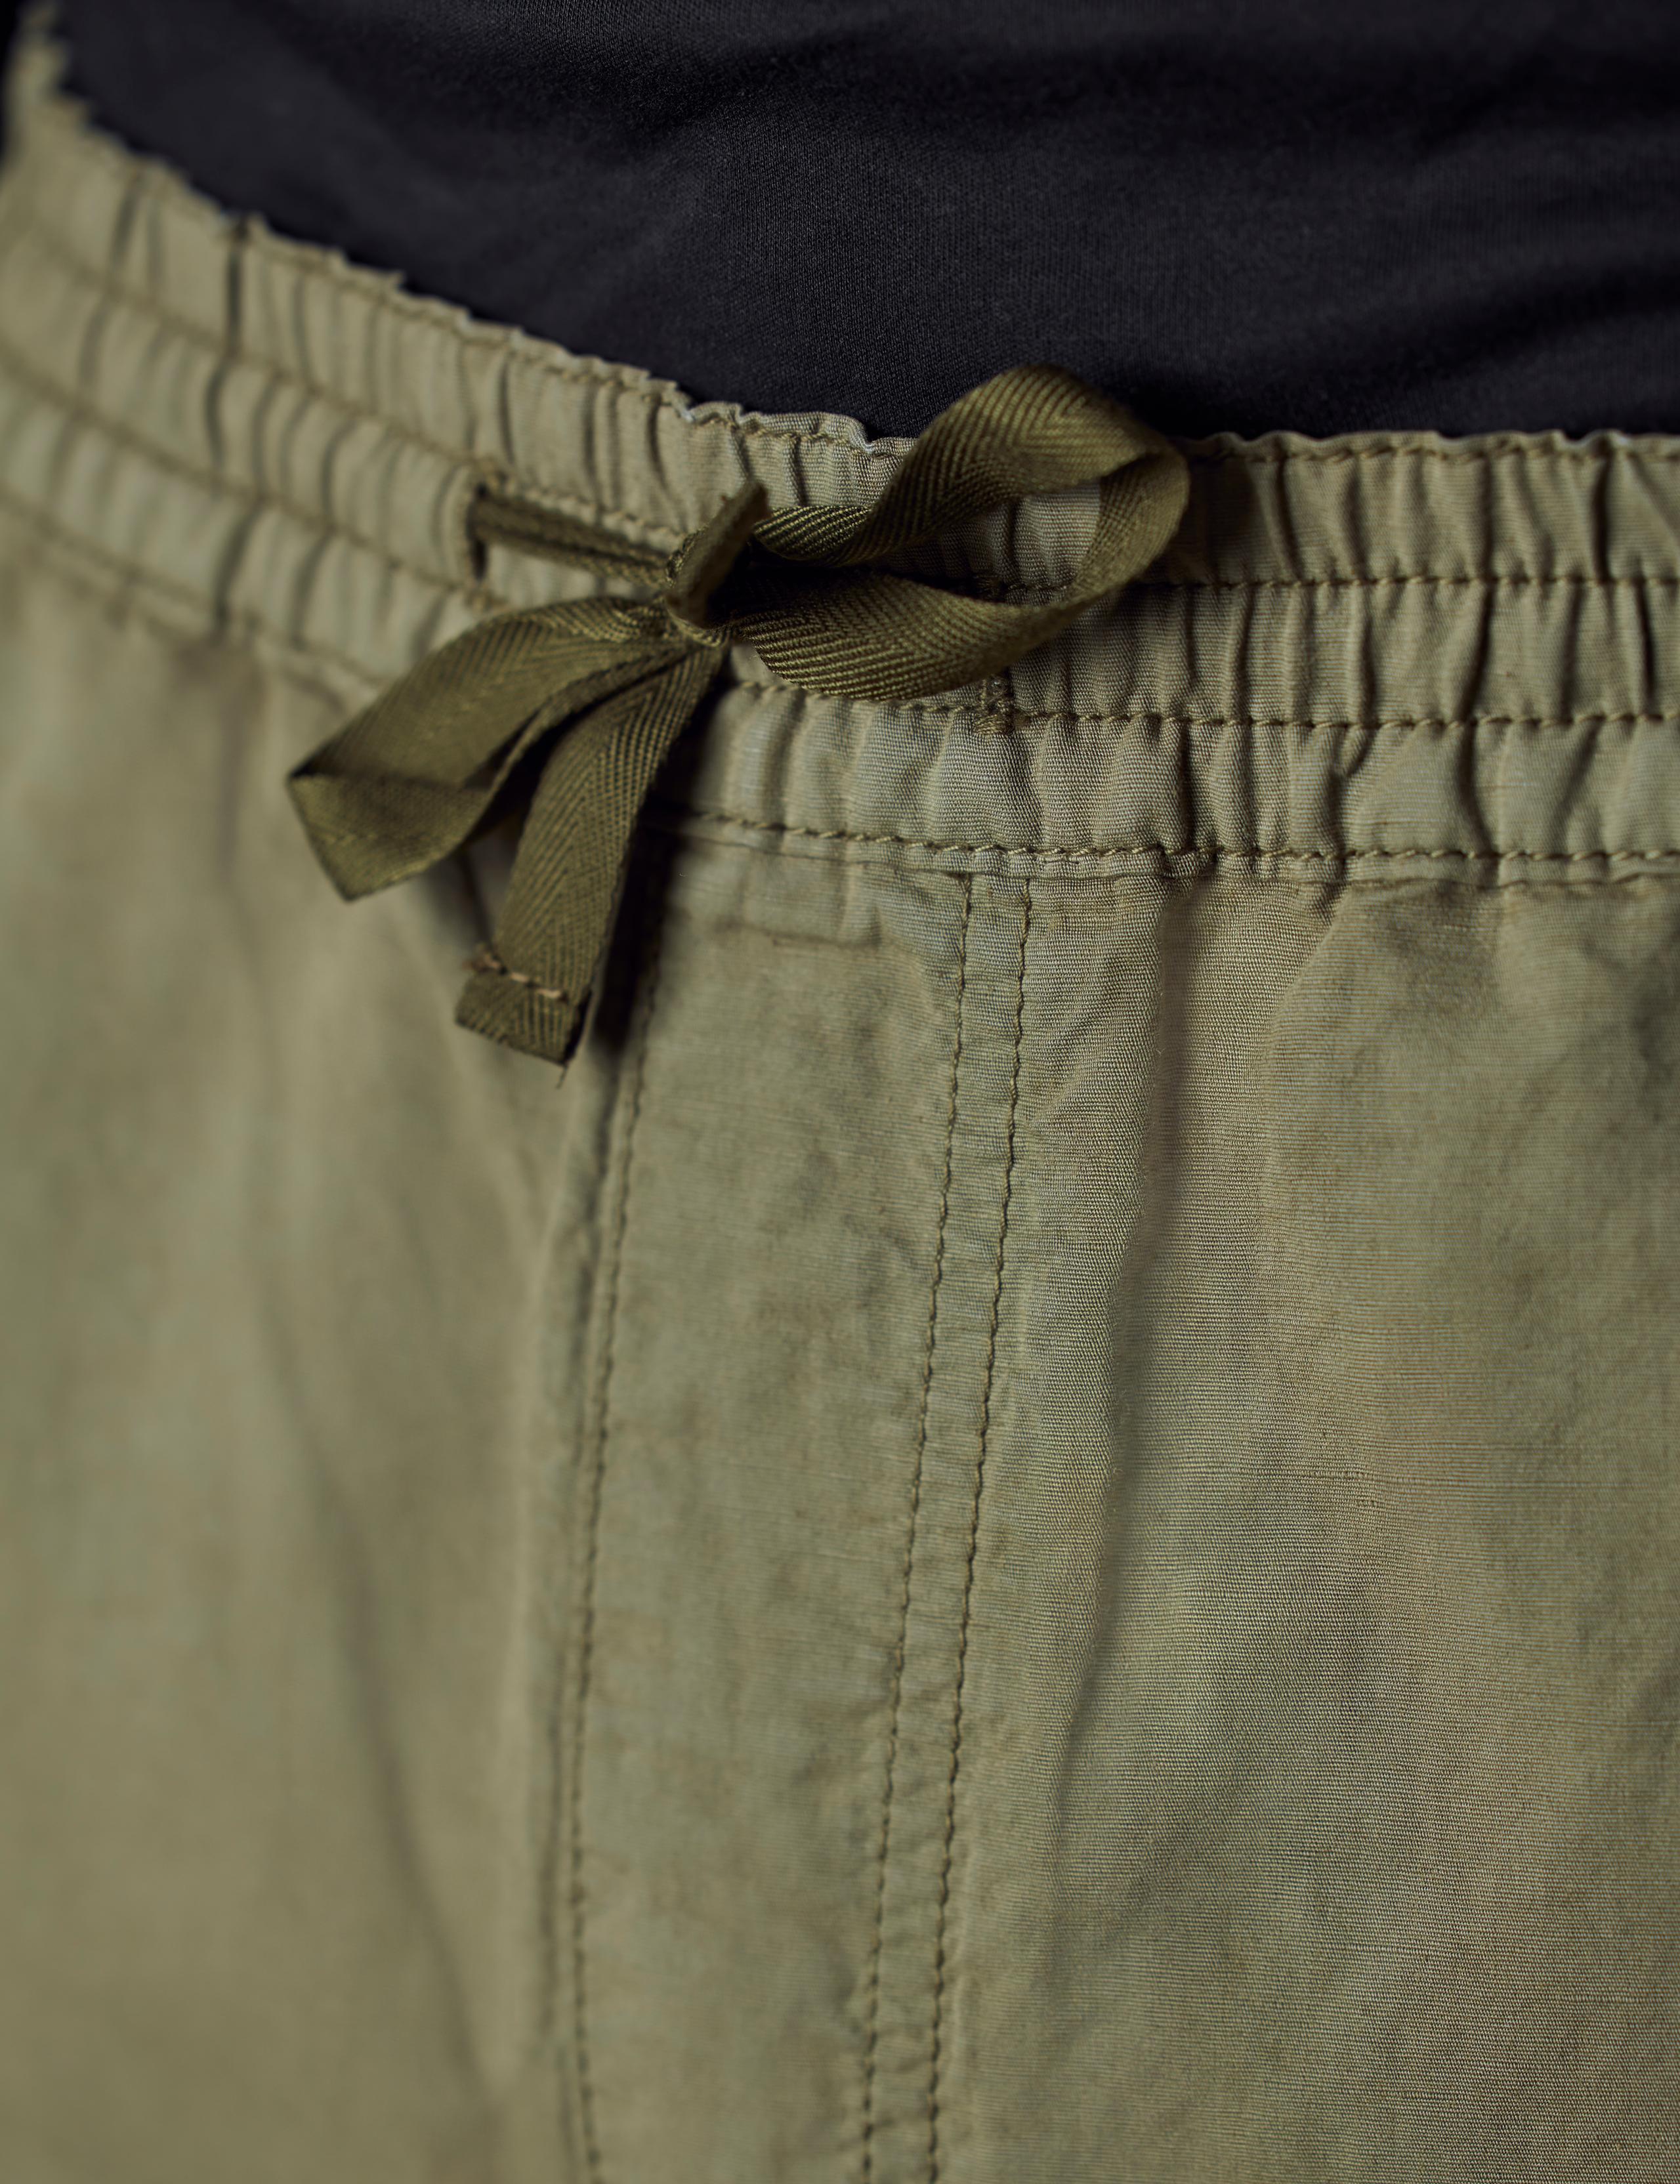 Elastic waistband detail of Highland Drawstring Pant.